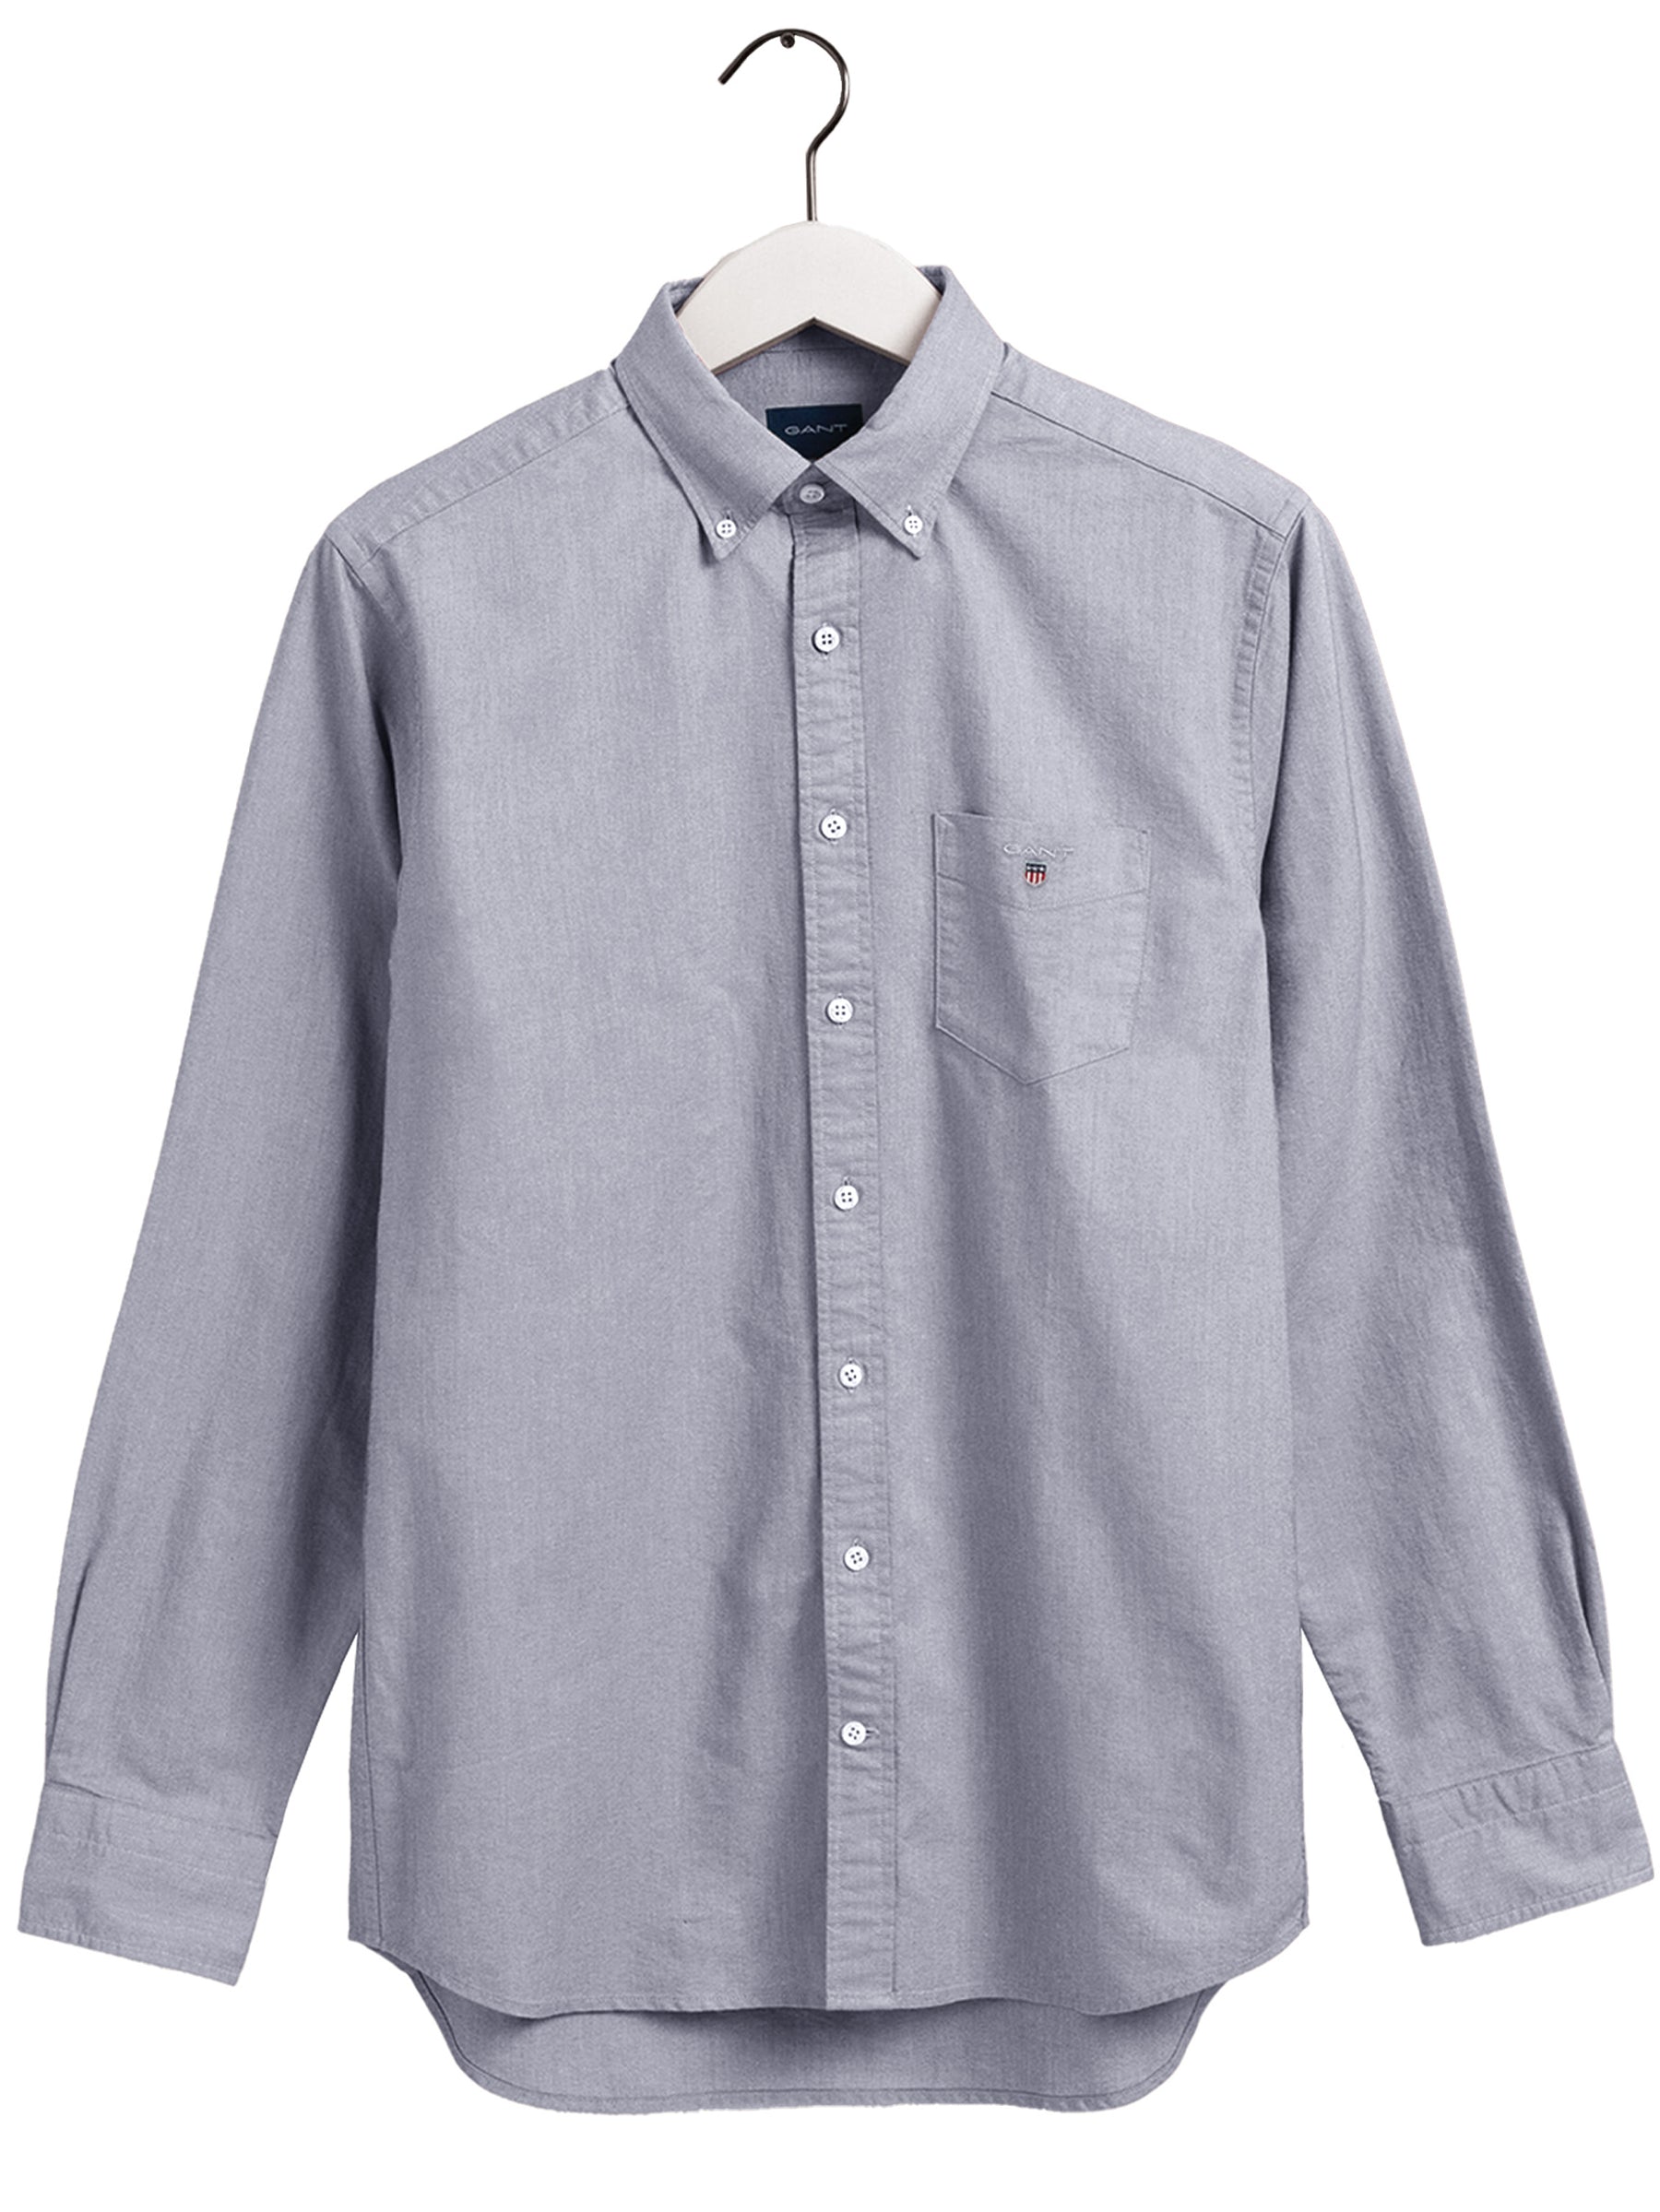 GANT_SHIRT_OXFORD Gant Mens Regular Fit Shirt | The Oxford Shirt GANT RAWDENIM